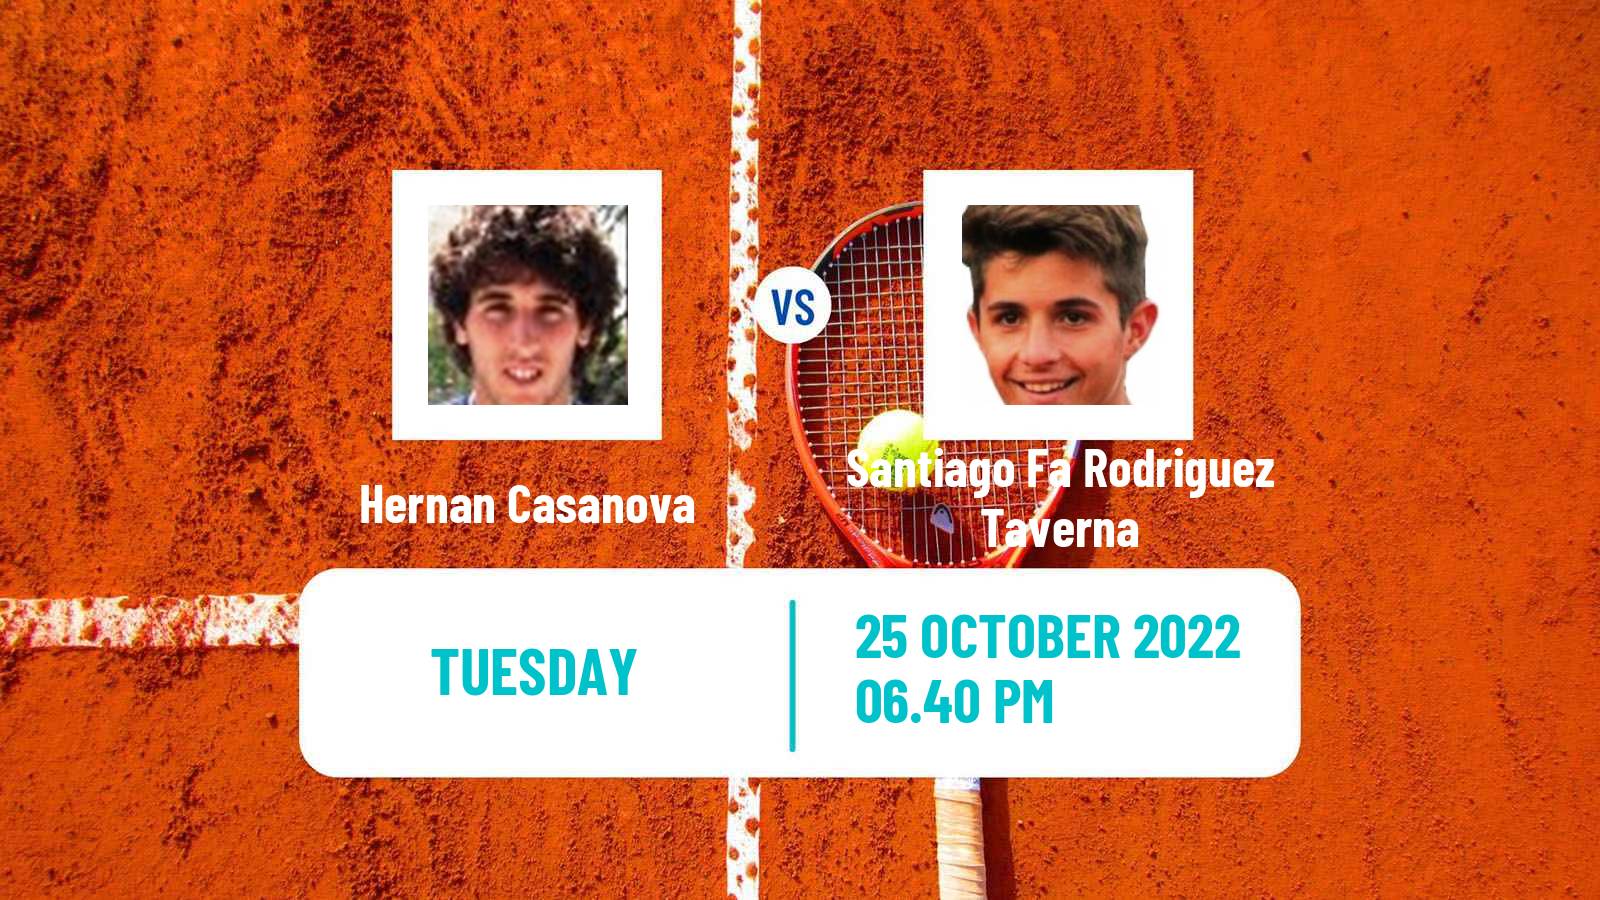 Tennis ATP Challenger Hernan Casanova - Santiago Fa Rodriguez Taverna